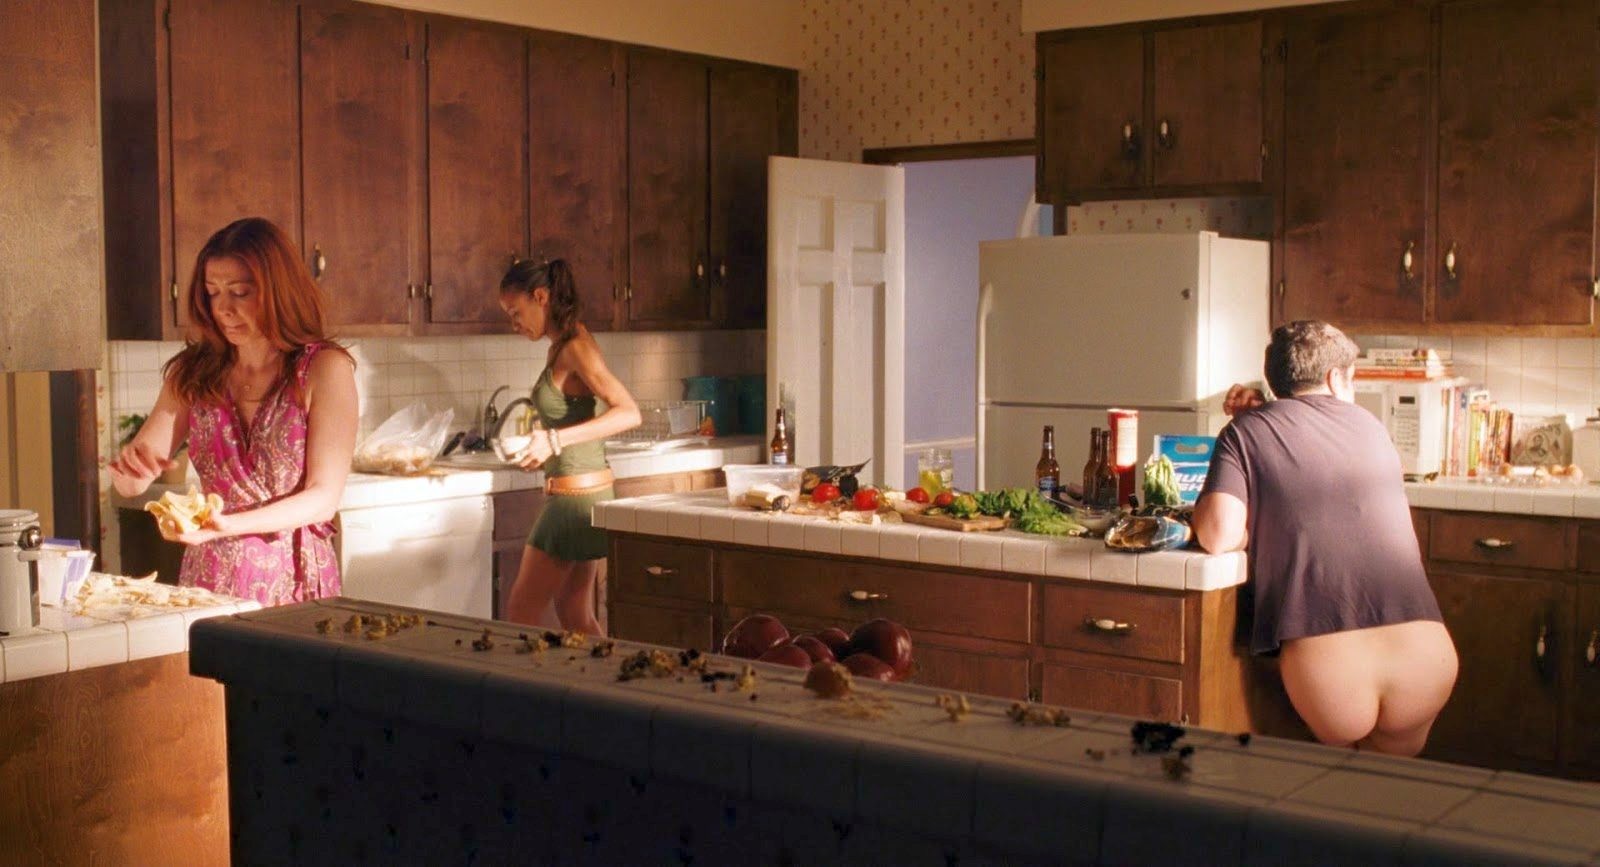 Jason Biggs nudo in "American Pie: Ancora insieme" (2012) .